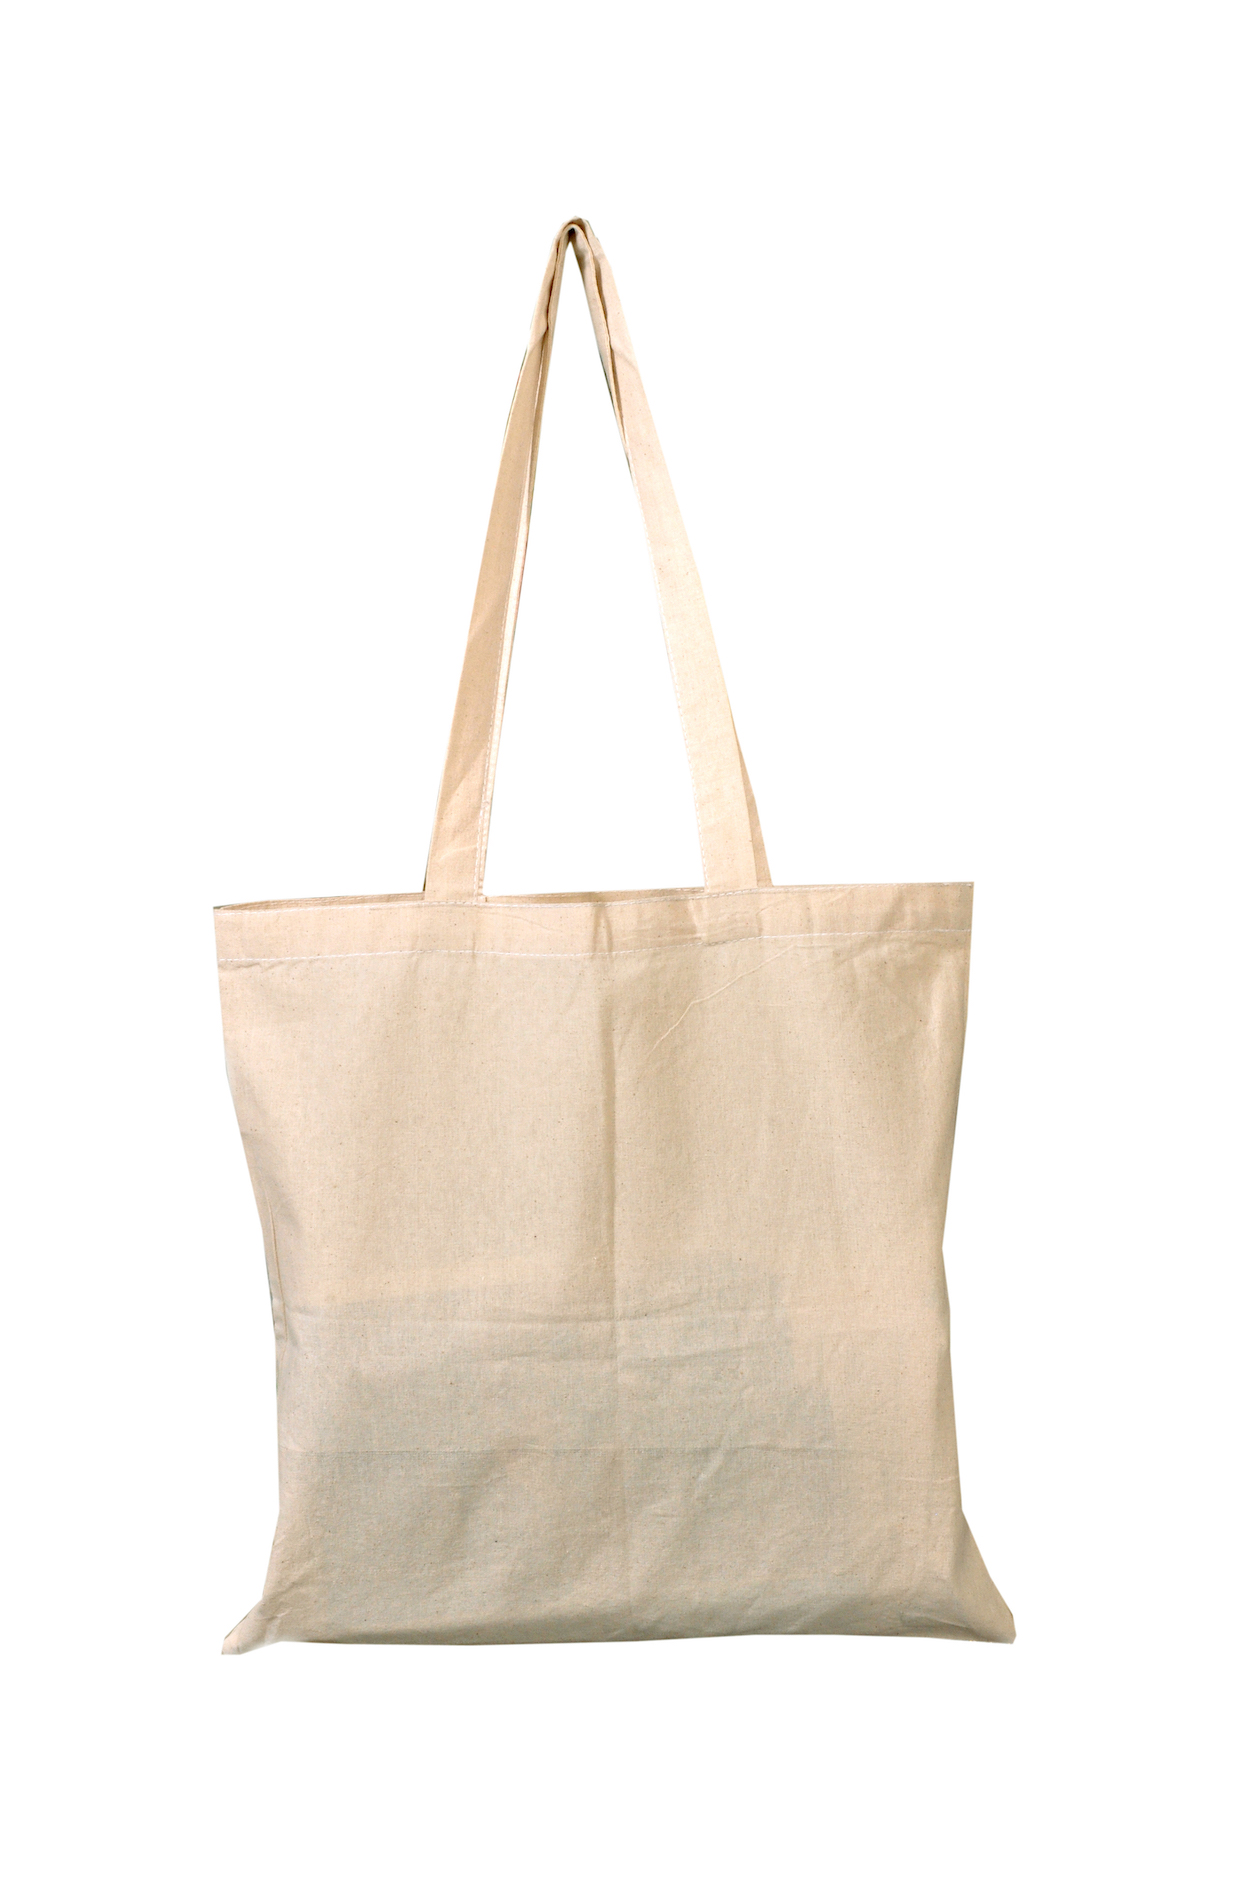 Free People Orange Lightweight Fabric Large Shoulder Bag Tote Cloth Purse  Boho | eBay